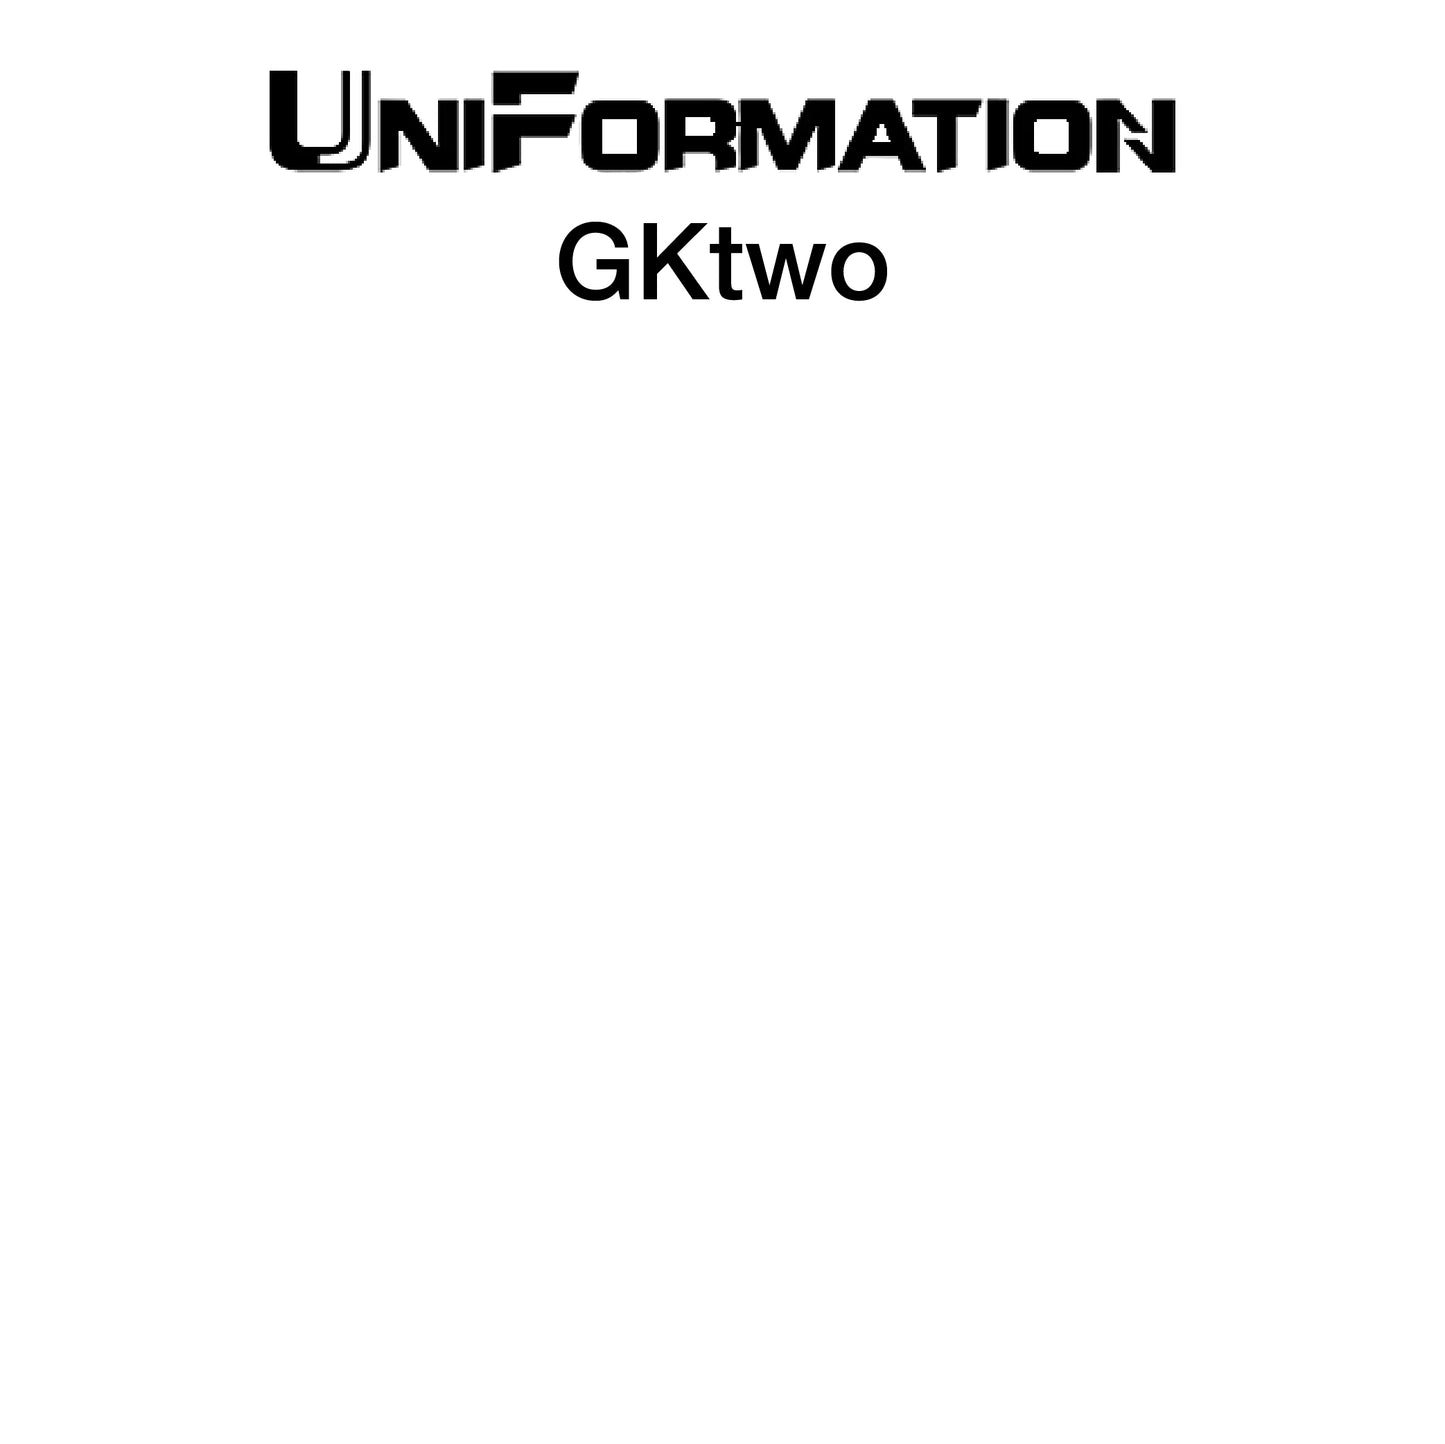 XTR Kit - UniFormation GKtwo - 229 x 129